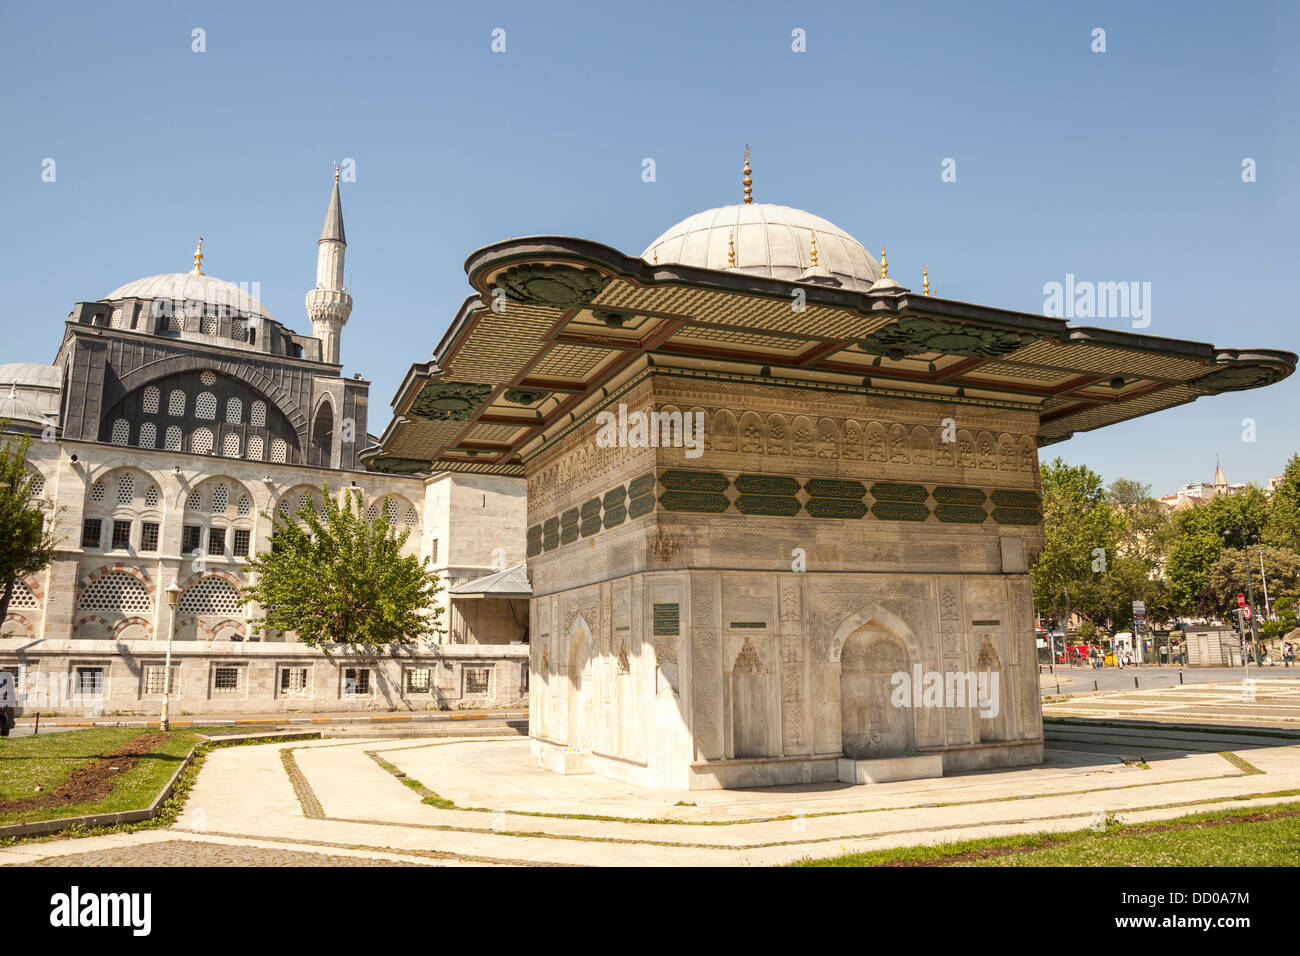 Kilic Ali Pasa Mosque und Kilic Ali Pasa Fountain, auch bekannt als Tophane Brunnen, Tophane, Beyoglu, Istanbul, Türkei Stockfoto